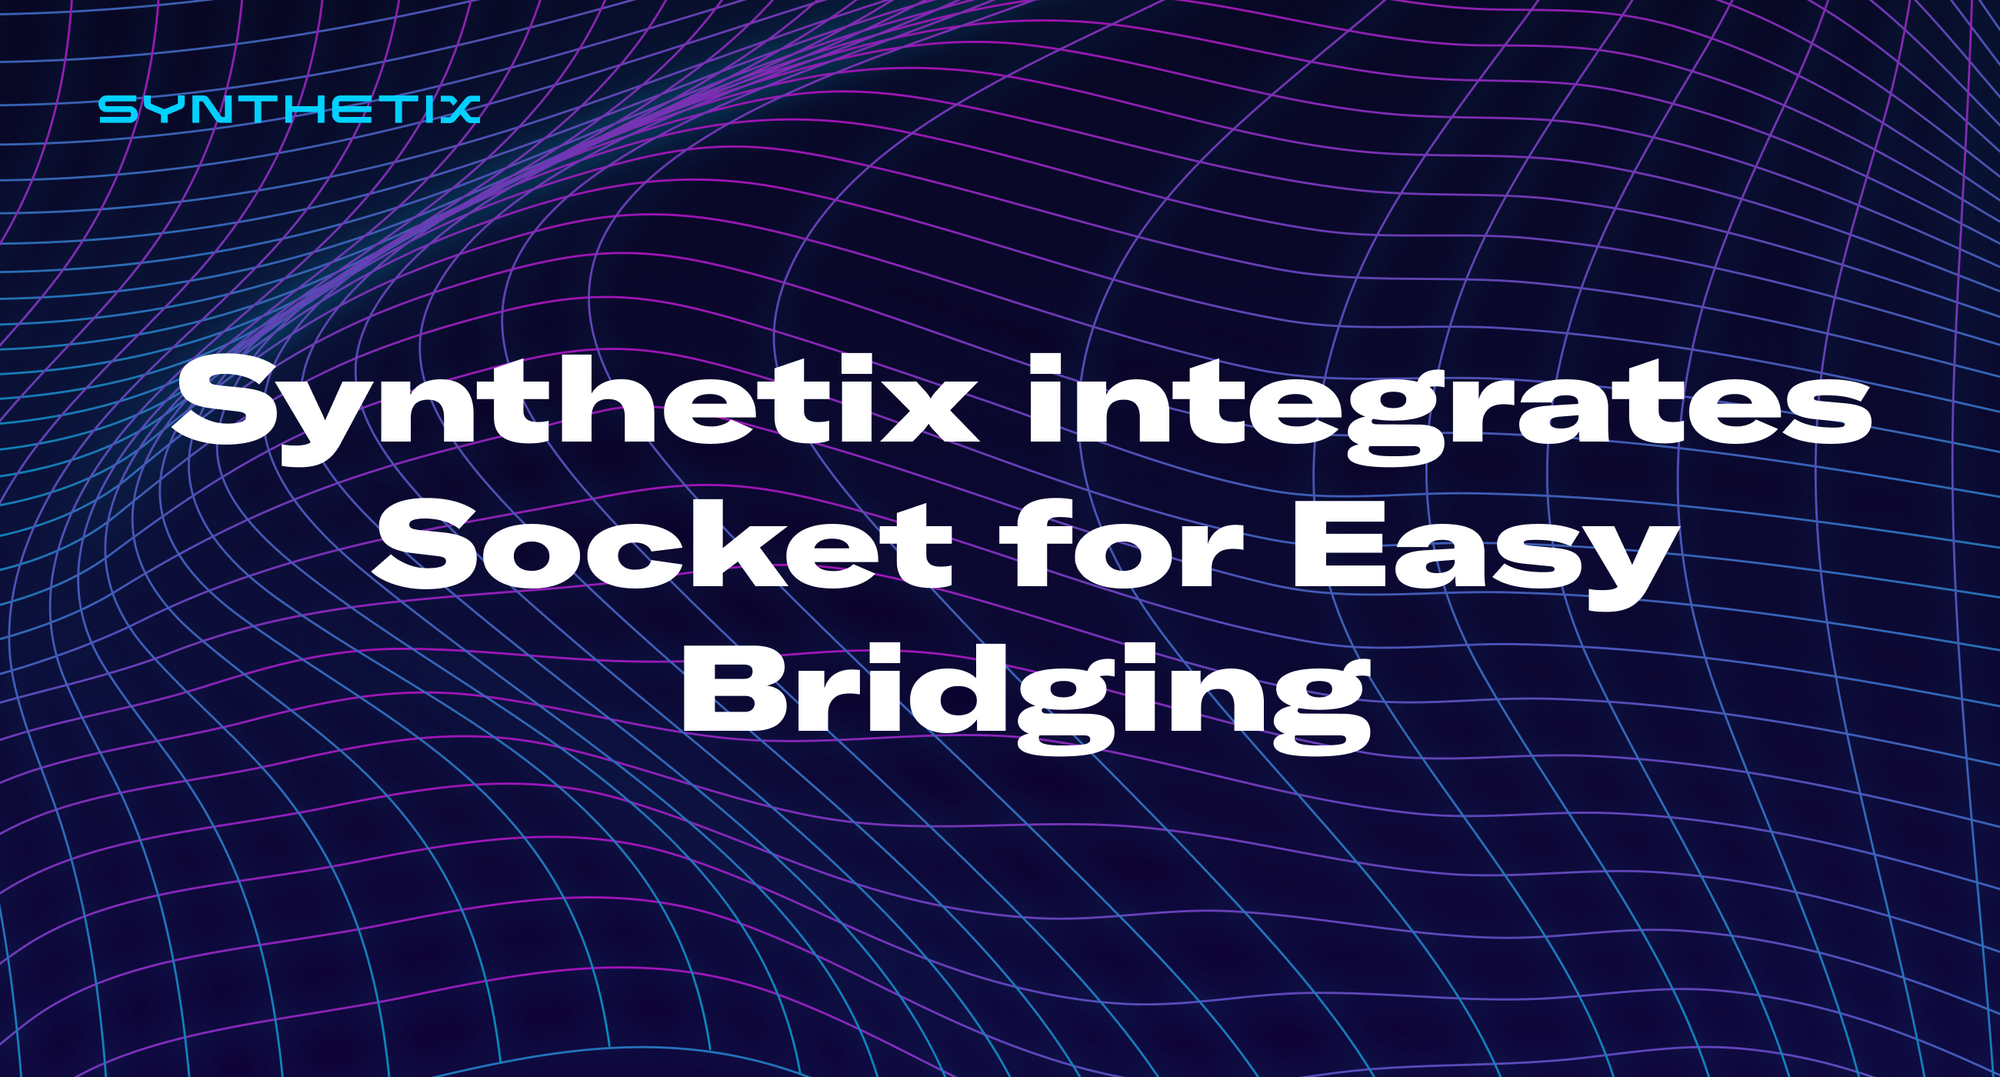 Synthetix Integrates Socket for Easy Bridging